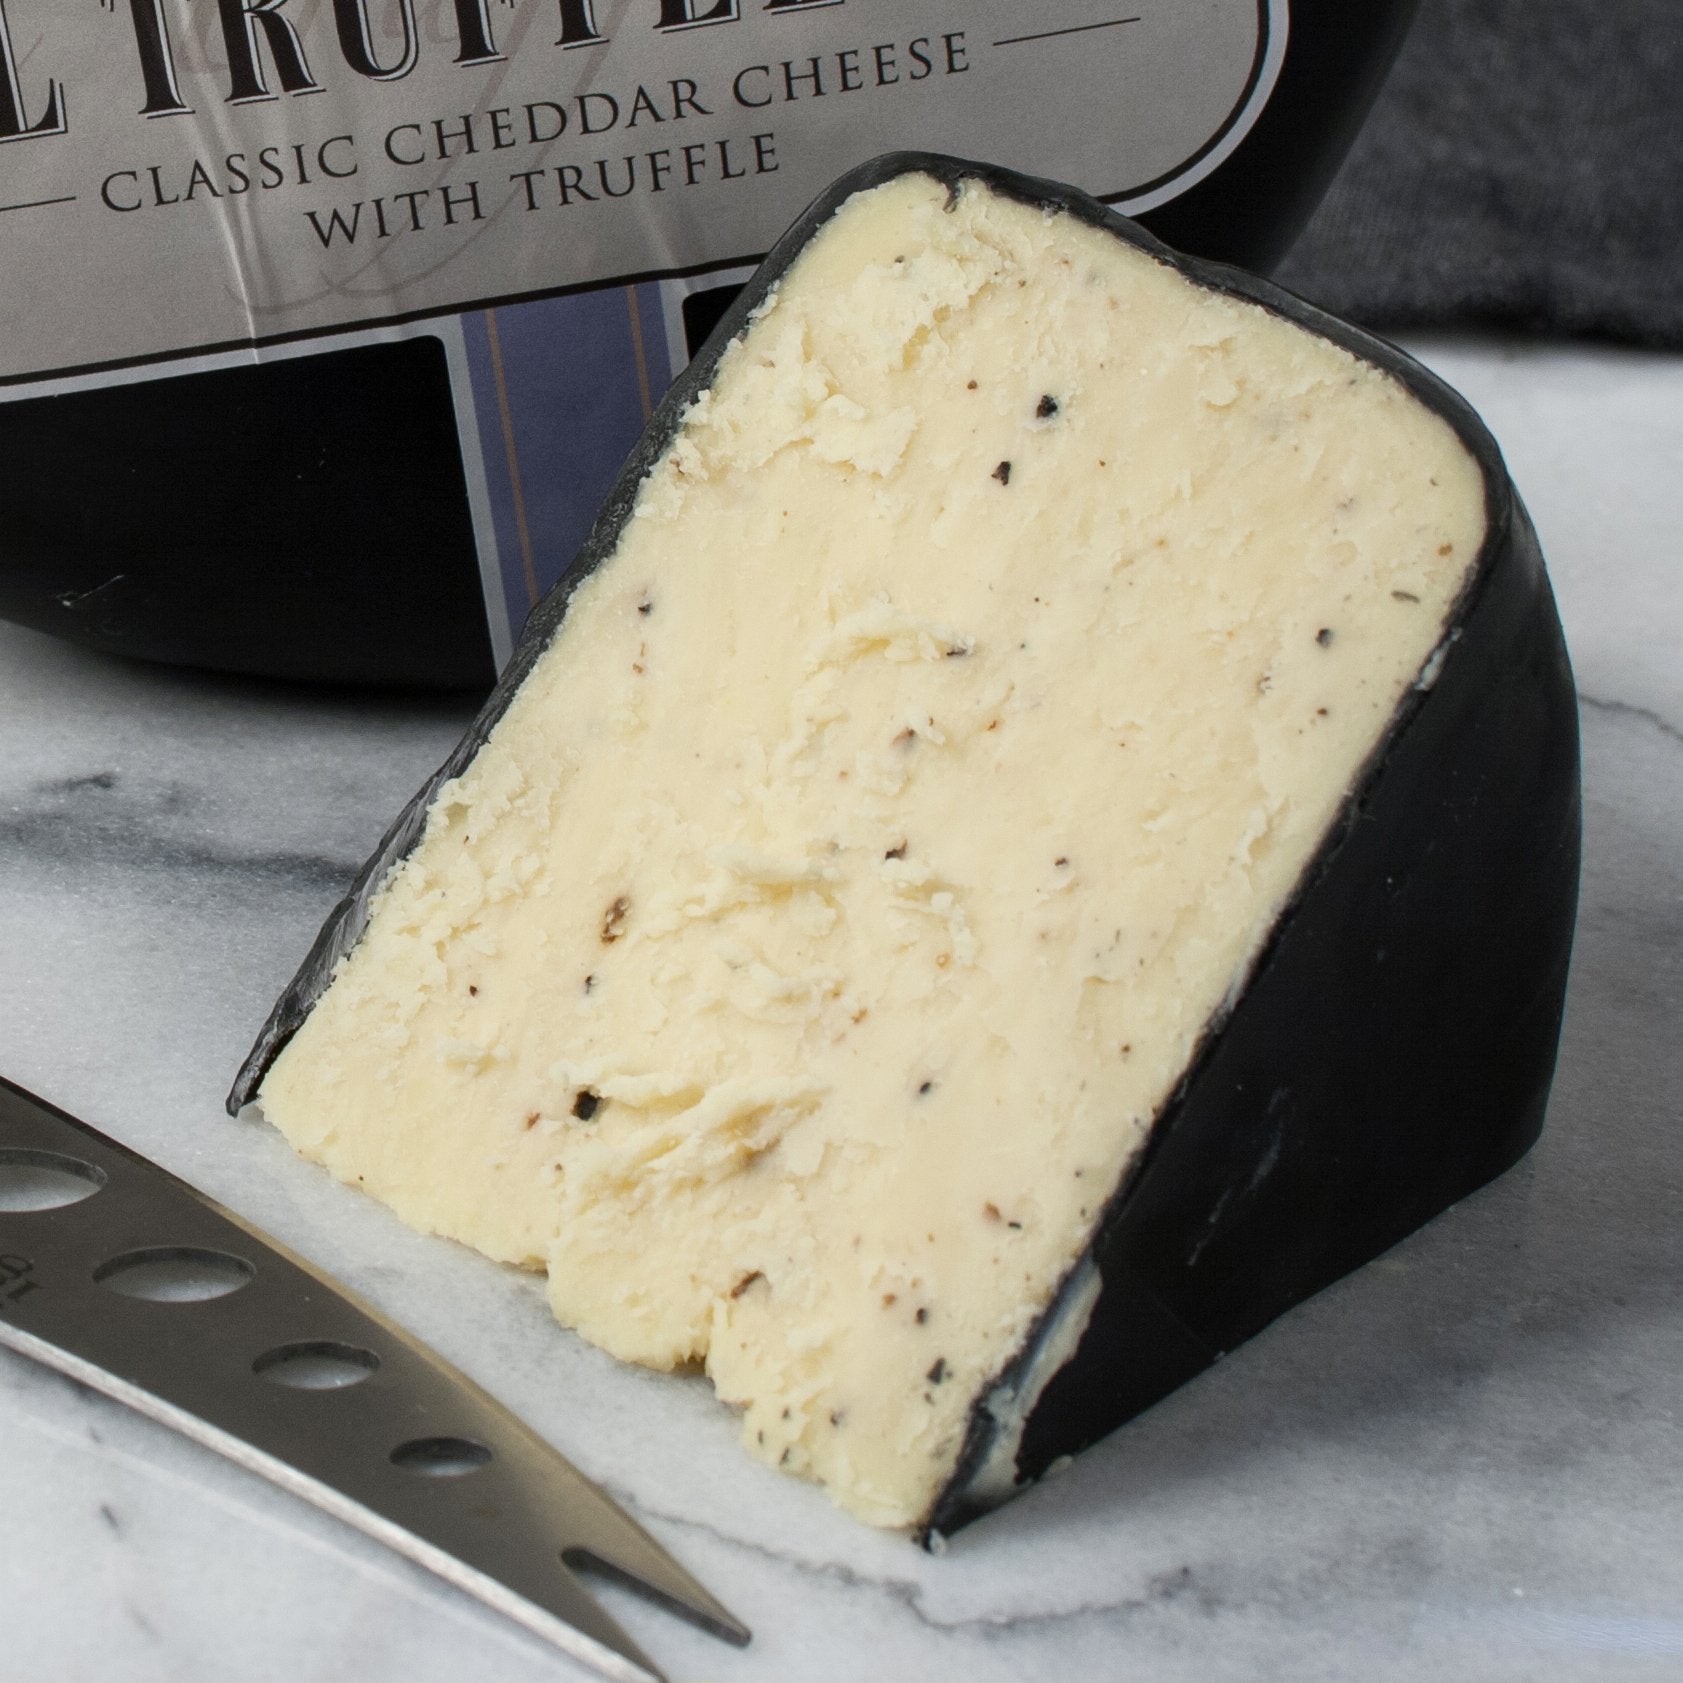 Il Truffelino Cheddar Cheese with Truffles - igourmet